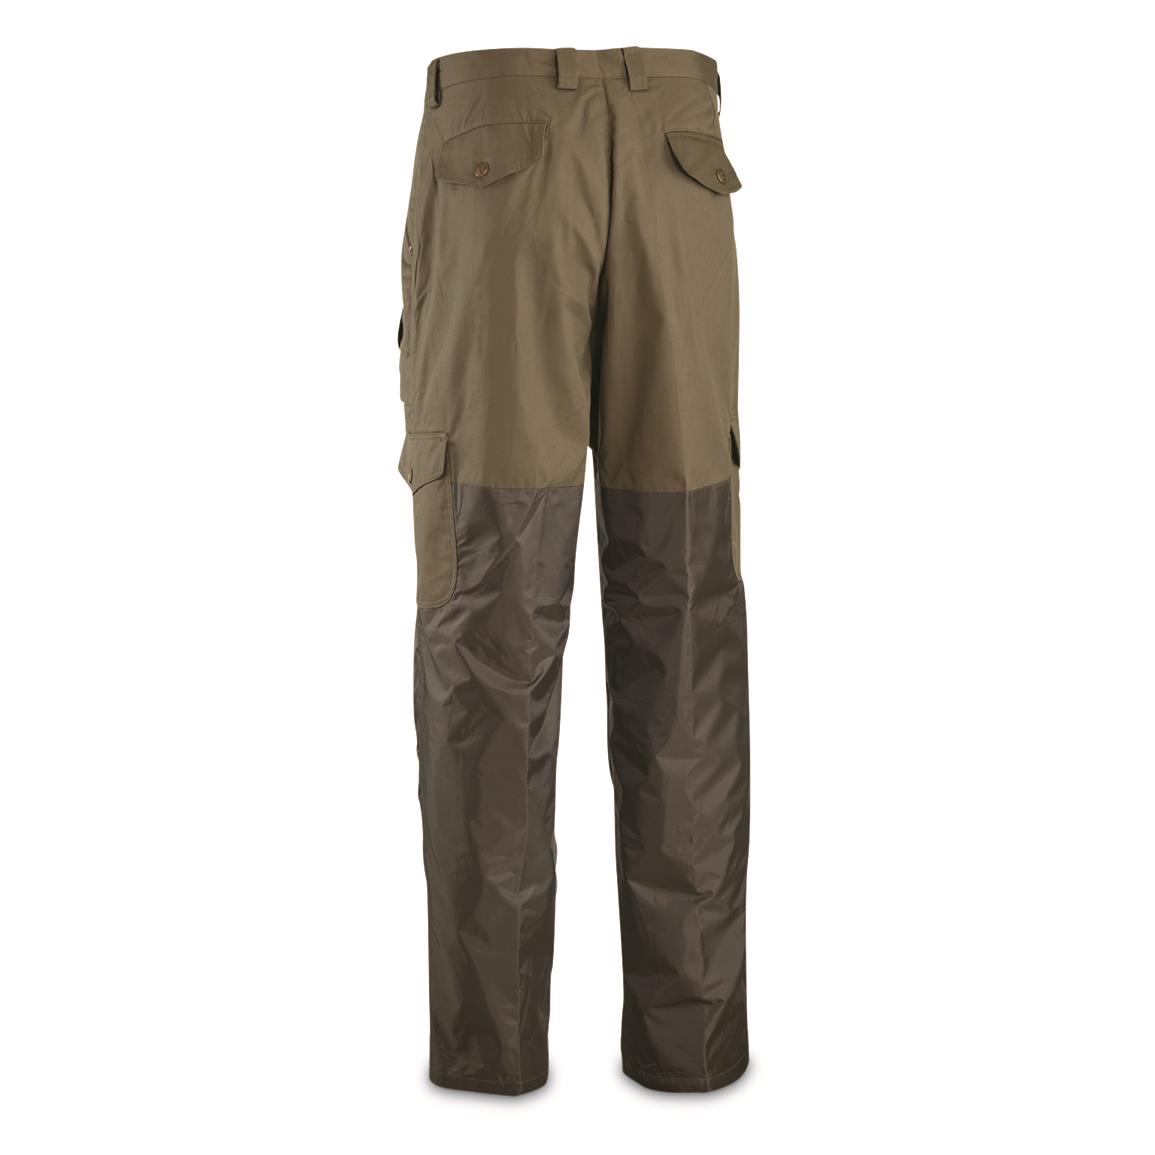 Guide Gear Men's Outdoor Cotton Cargo Pants - 677832, Jeans & Pants at  Sportsman's Guide